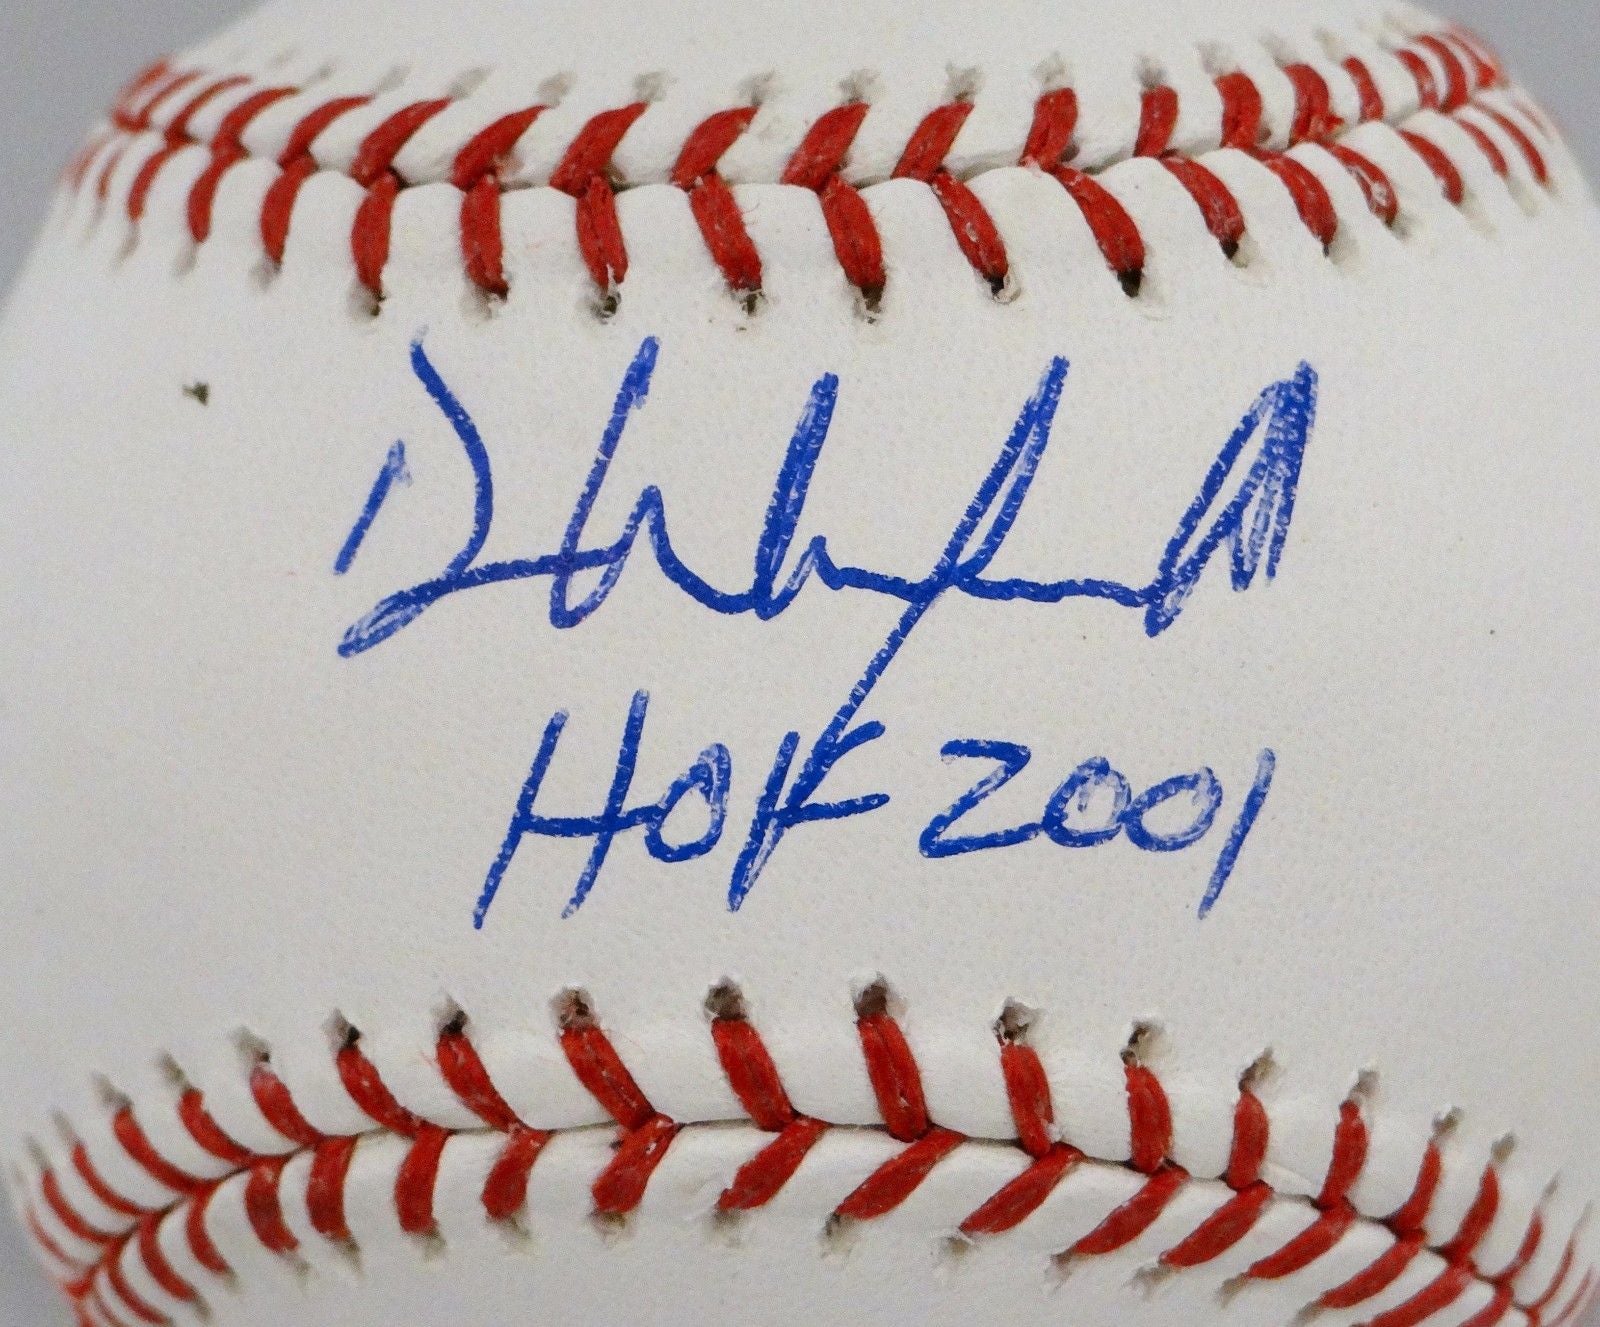 Dave Winfield Autographed Baseball w/ HOF Inscription 